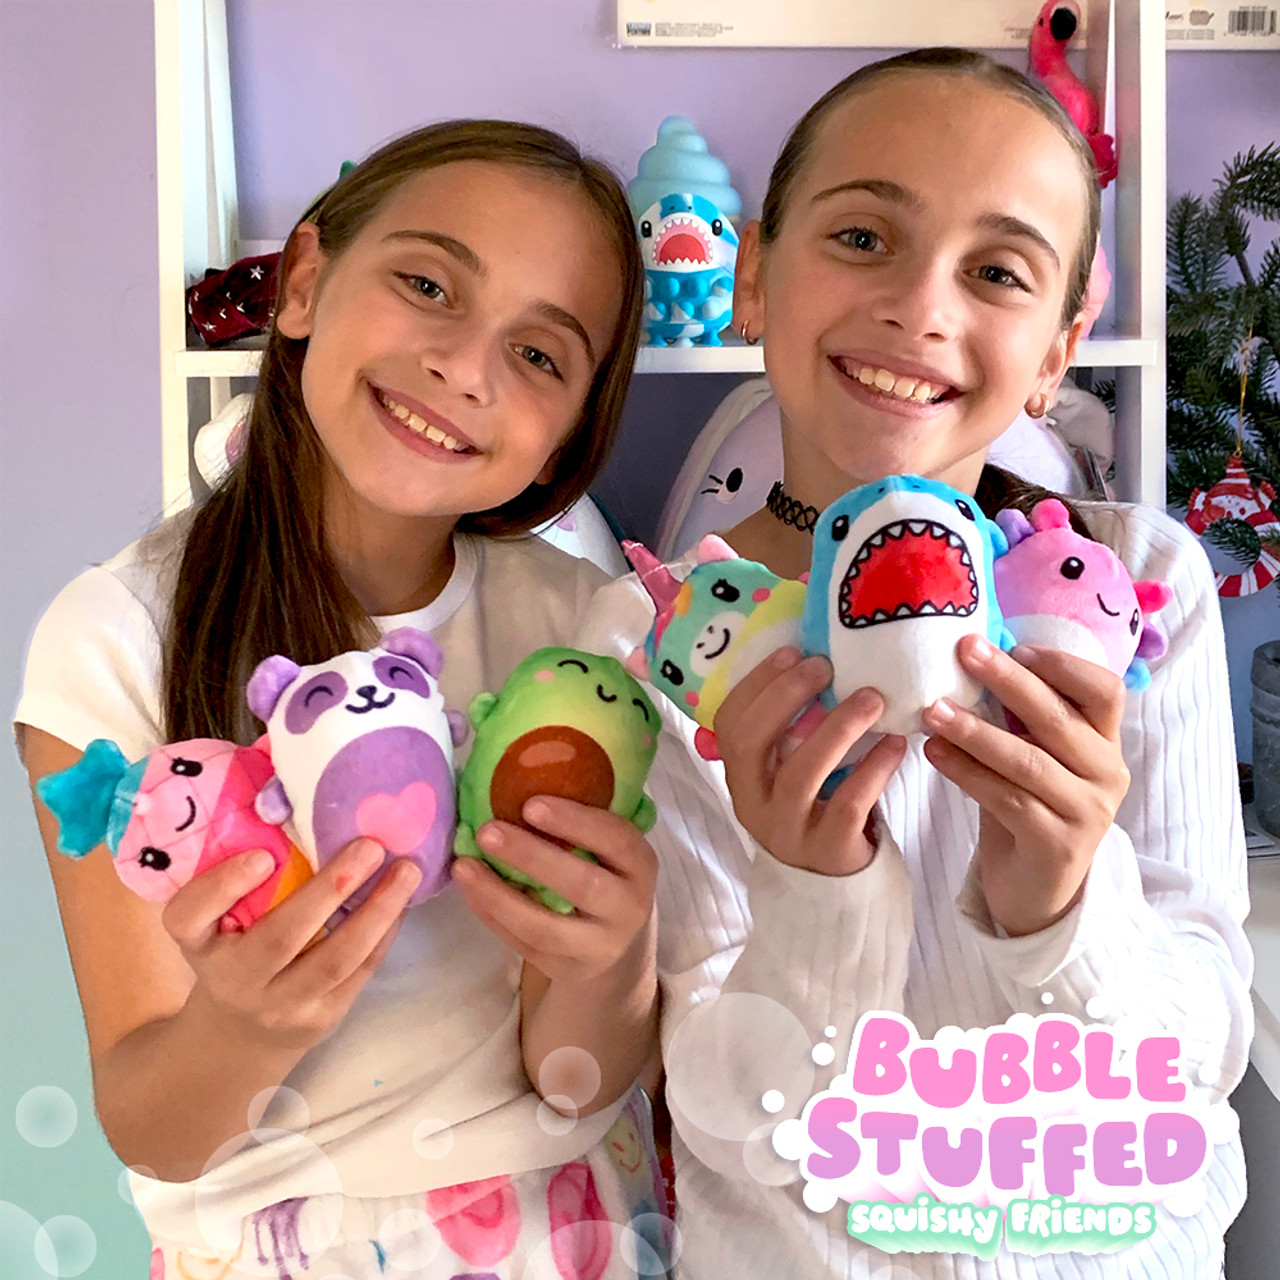 Bubble Stuffed Squishy Friends  Plush Wrapped Fidget DNA Balls